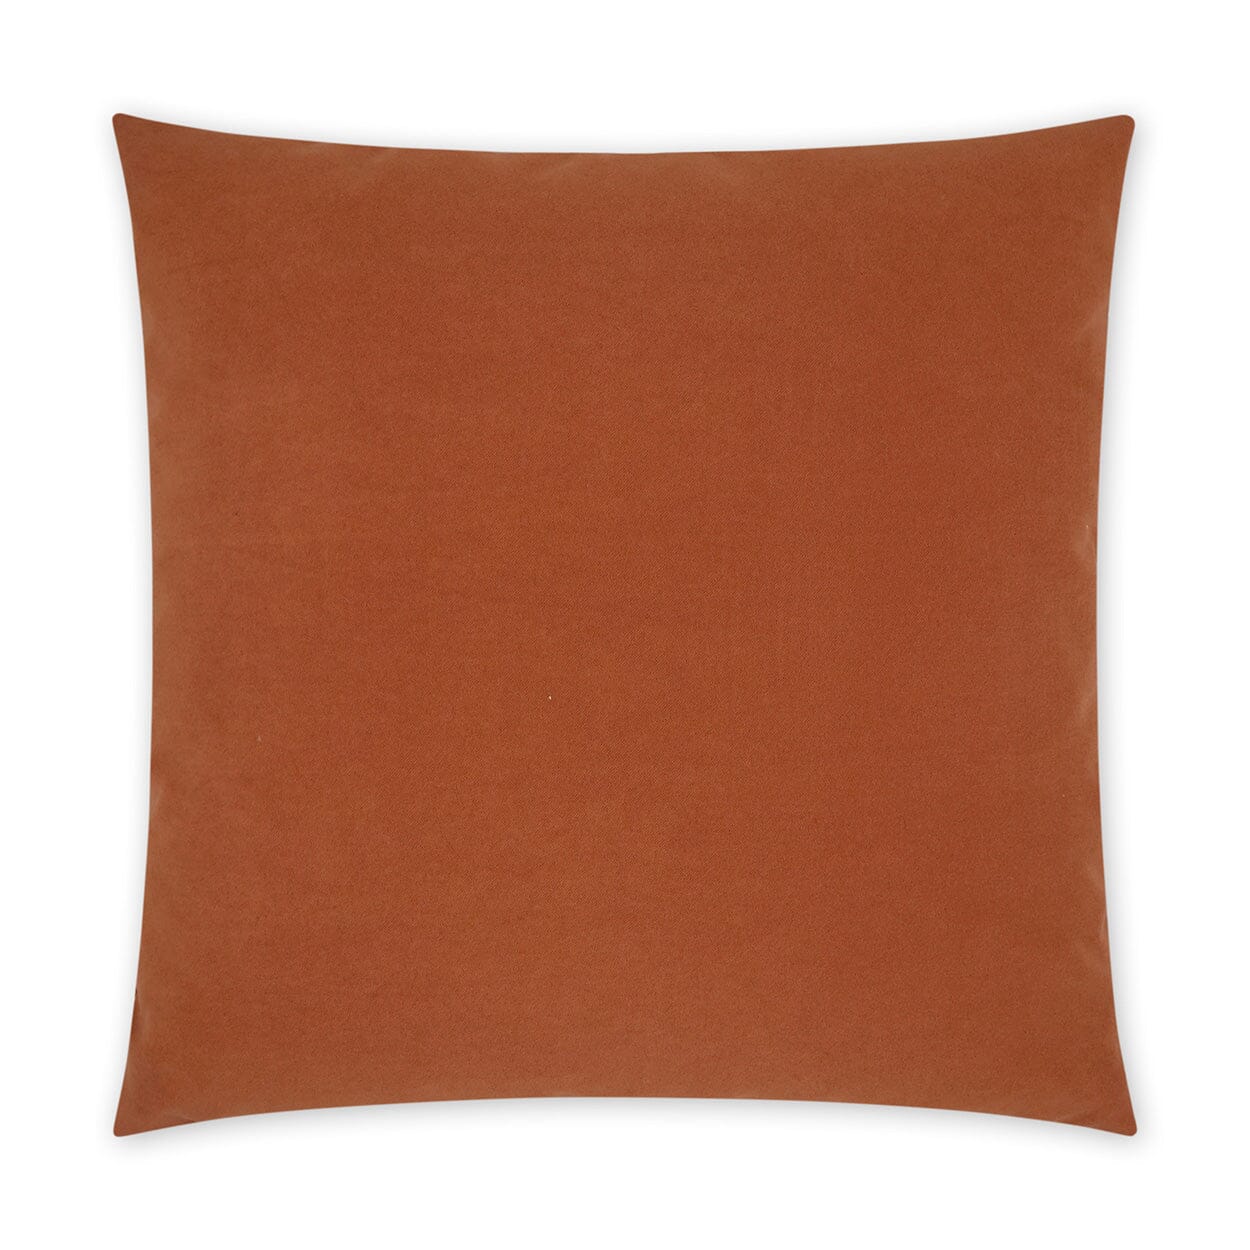 D.V. Kap 22" x 22" Outdoor Throw Pillow | Sundance Orange Pillows D.V Kap Outdoor